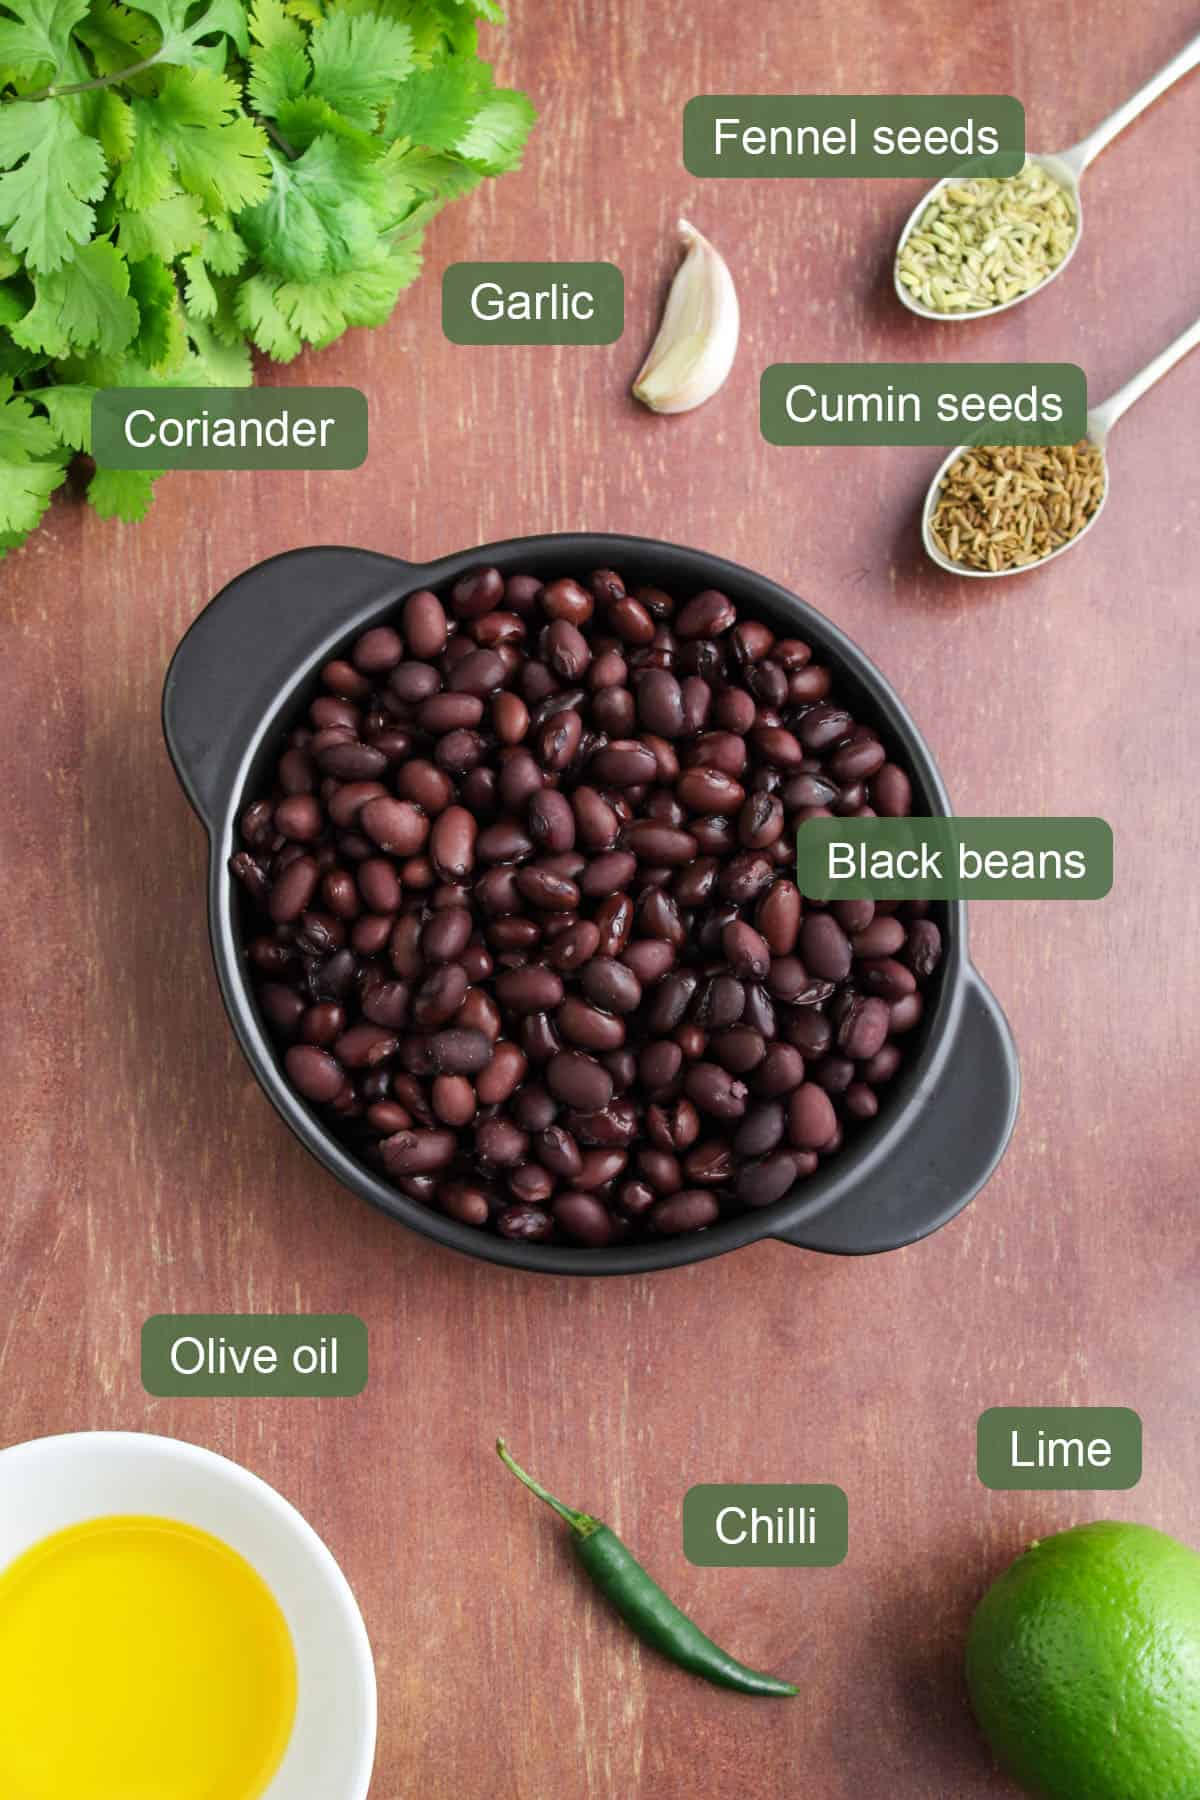 List of Vegan Ingredients to Make Black Bean Dip